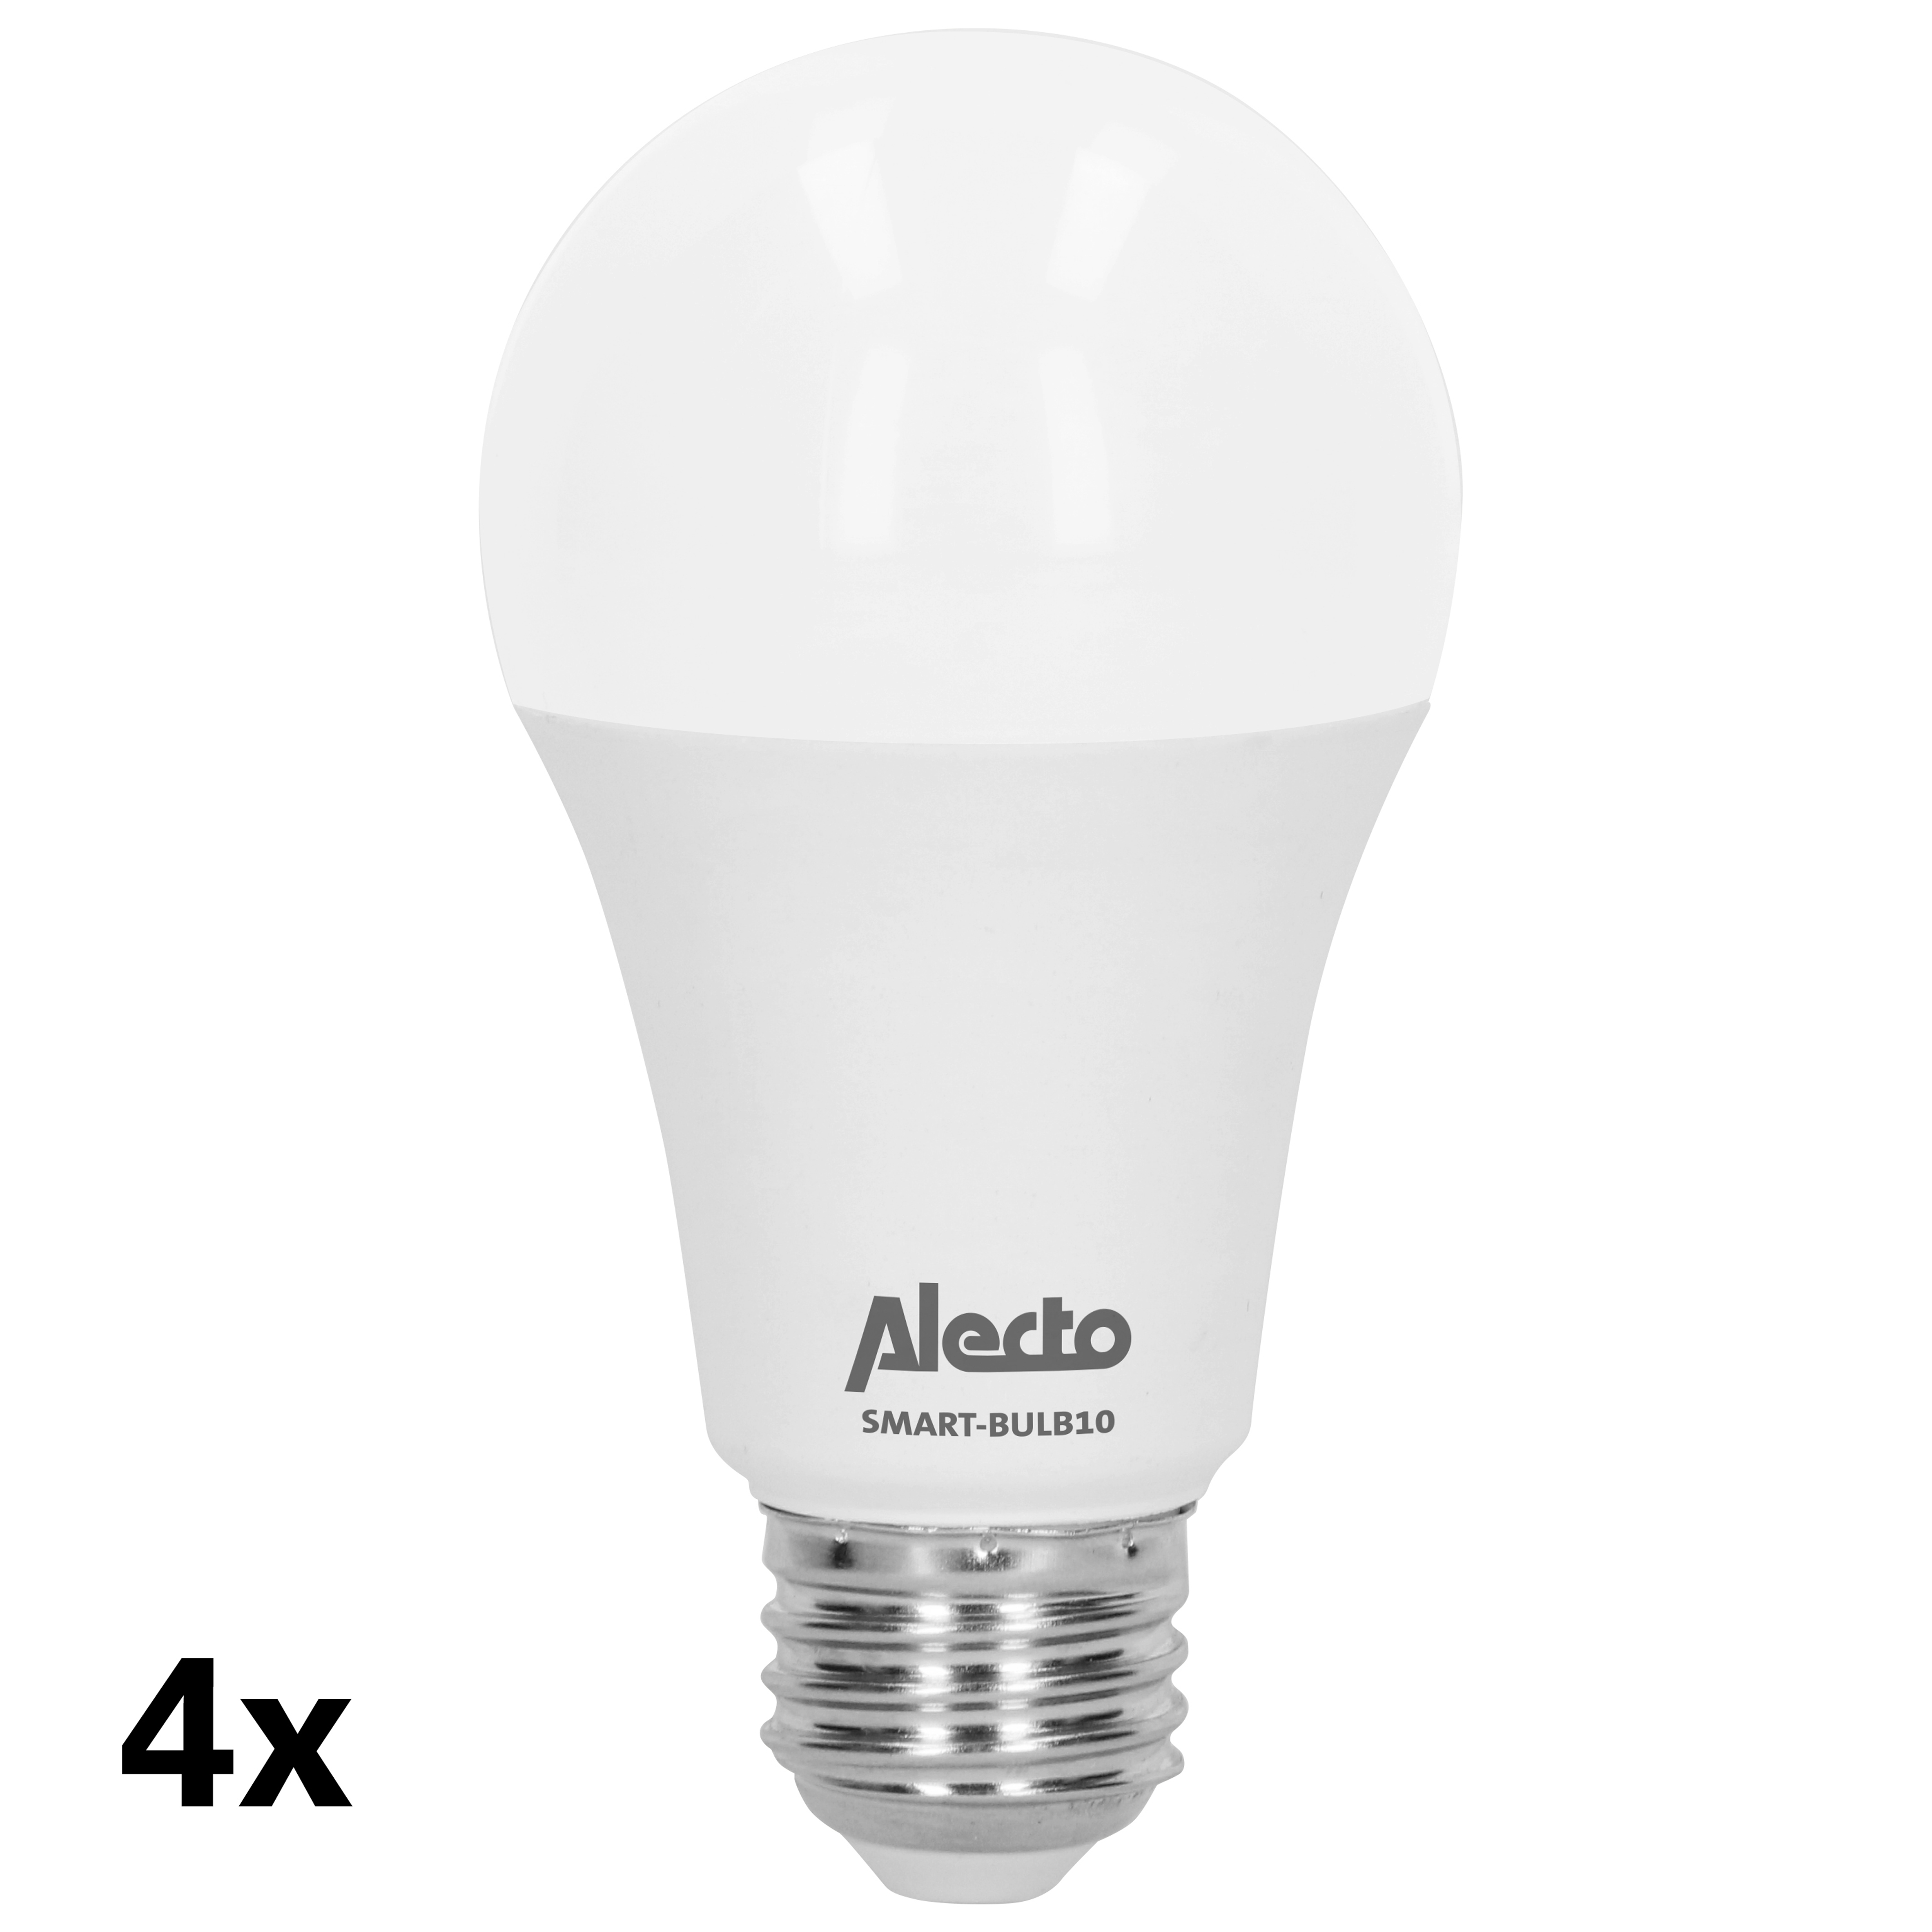 ALECTO SMART-BULB10 4-PACK - 4er Weiß,Neutrales mit Weiß,Warmes Weiß,RGB,Sehr WLAN-LED-Glühlampen E27-Sockel Kaltes warmes smarte,mehrfarbige Weiß Pack